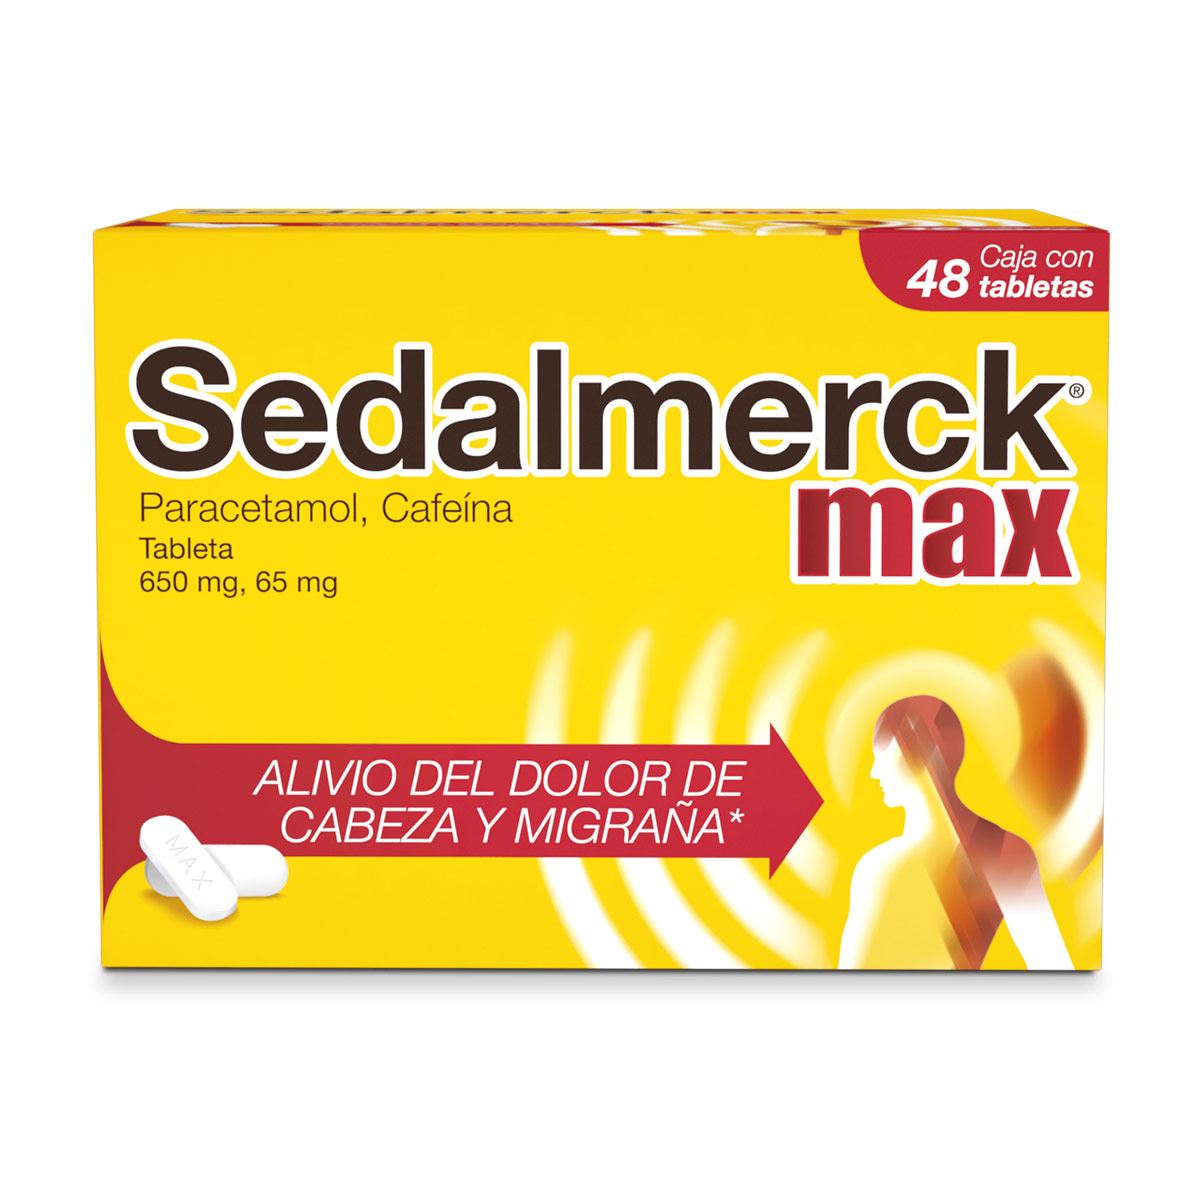 Sedalmerck Max